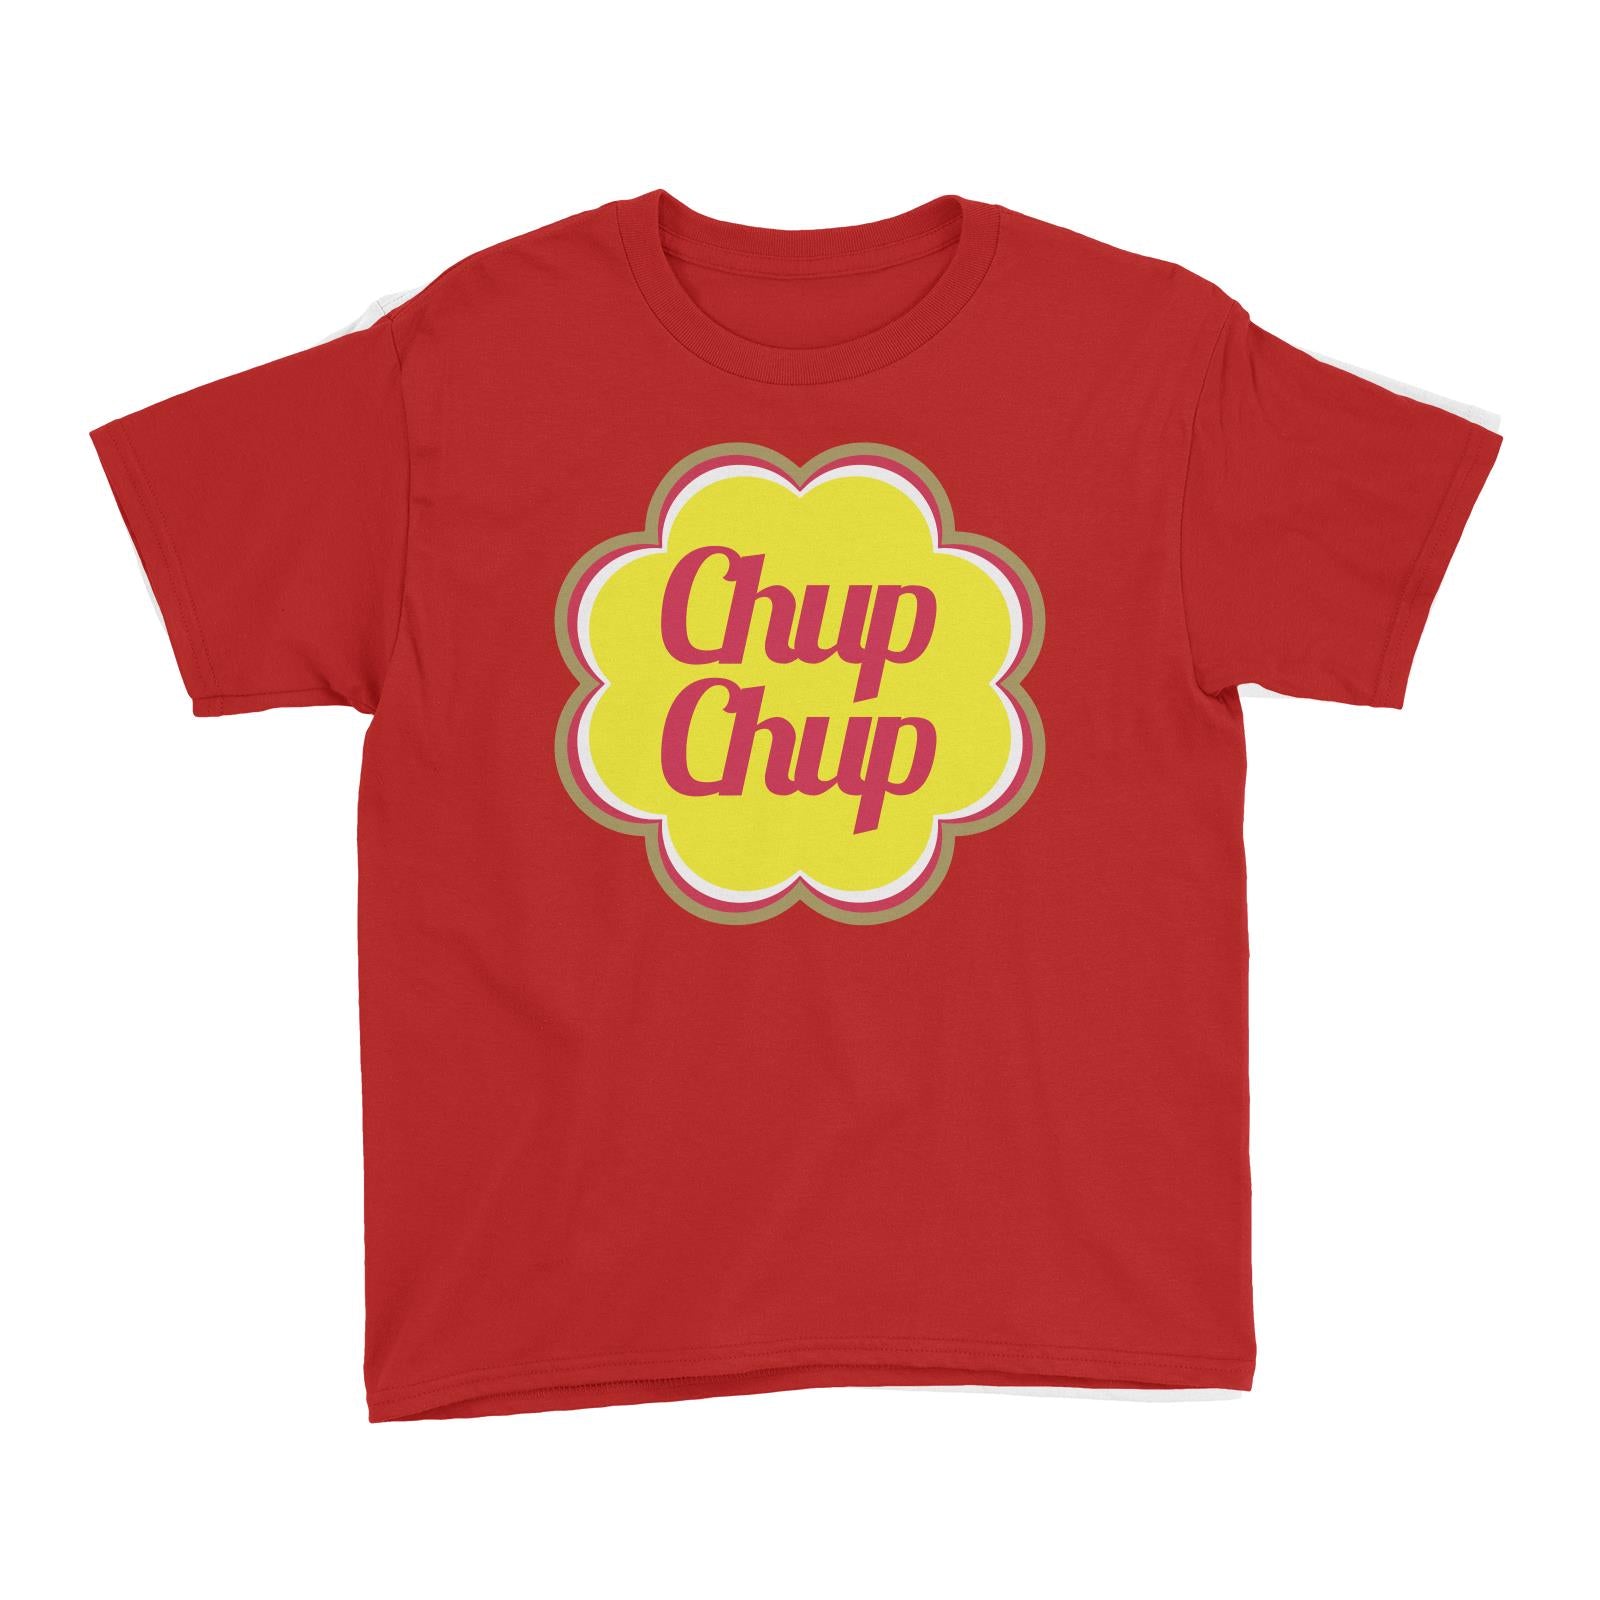 Slang Statement Chup Chup Kid's T-Shirt